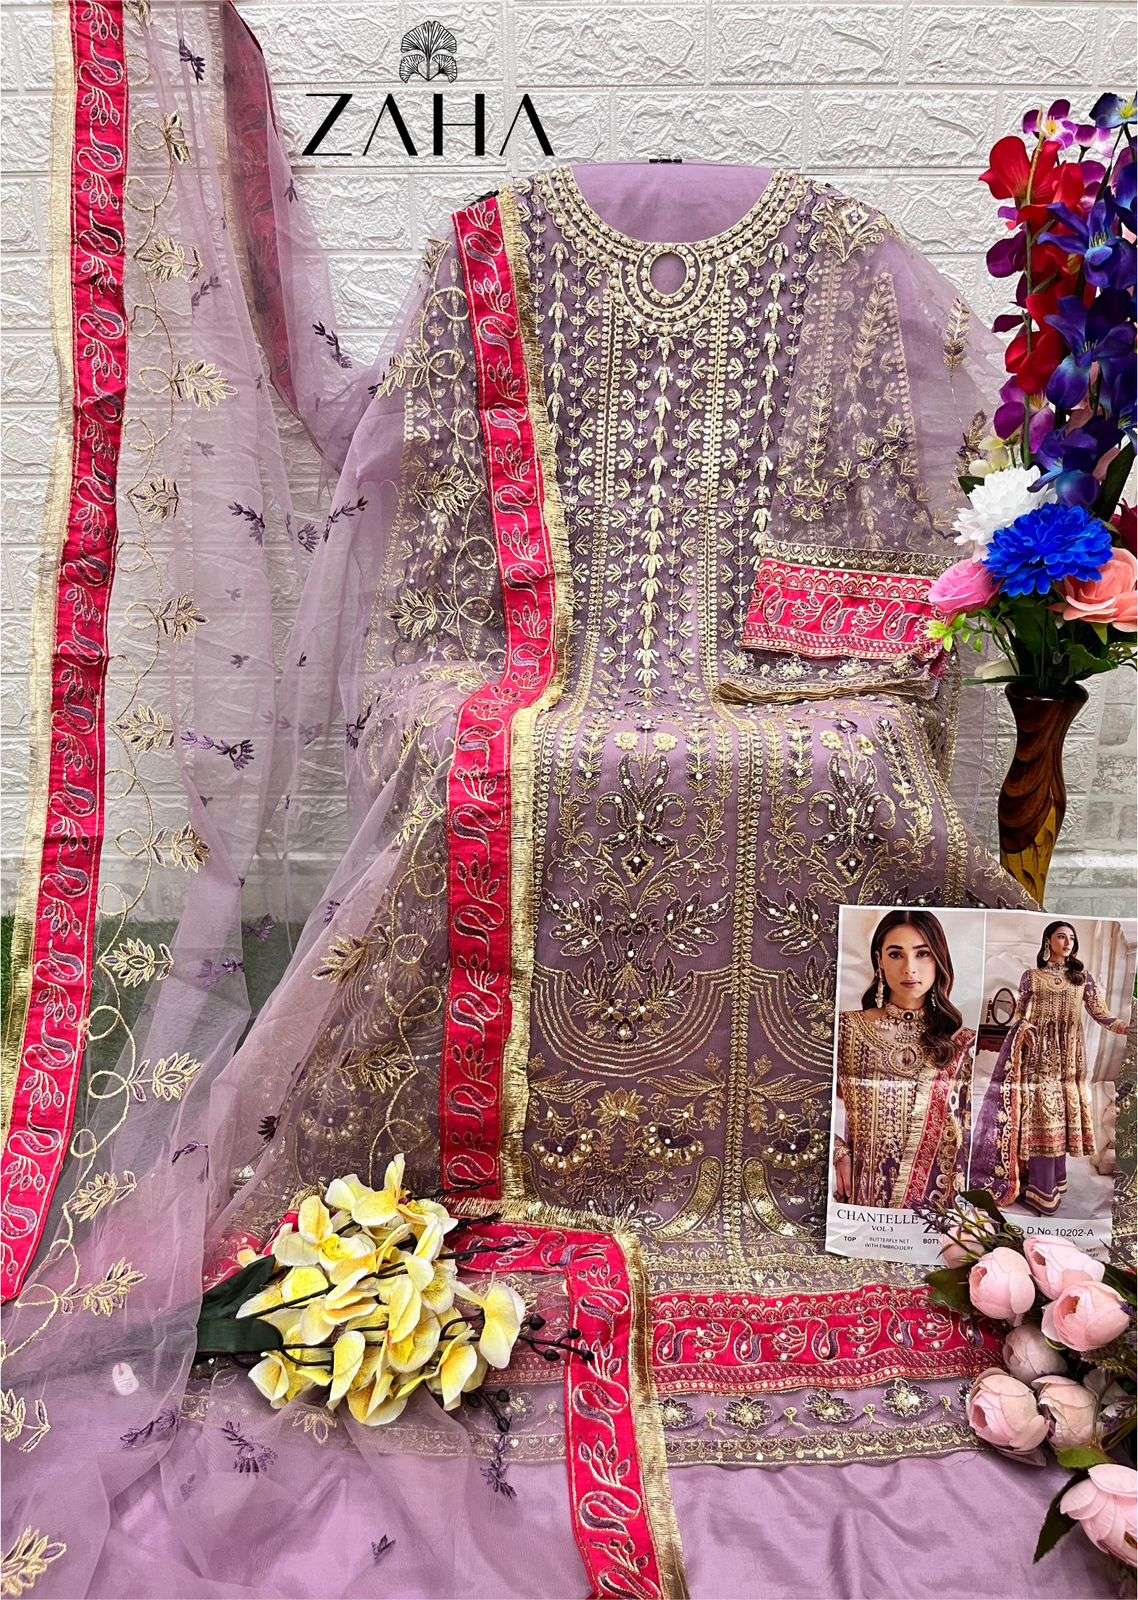 zaha chantelle vol-3 10202 colour series designer pakistani salwar kameez wholesaler surat gujarat